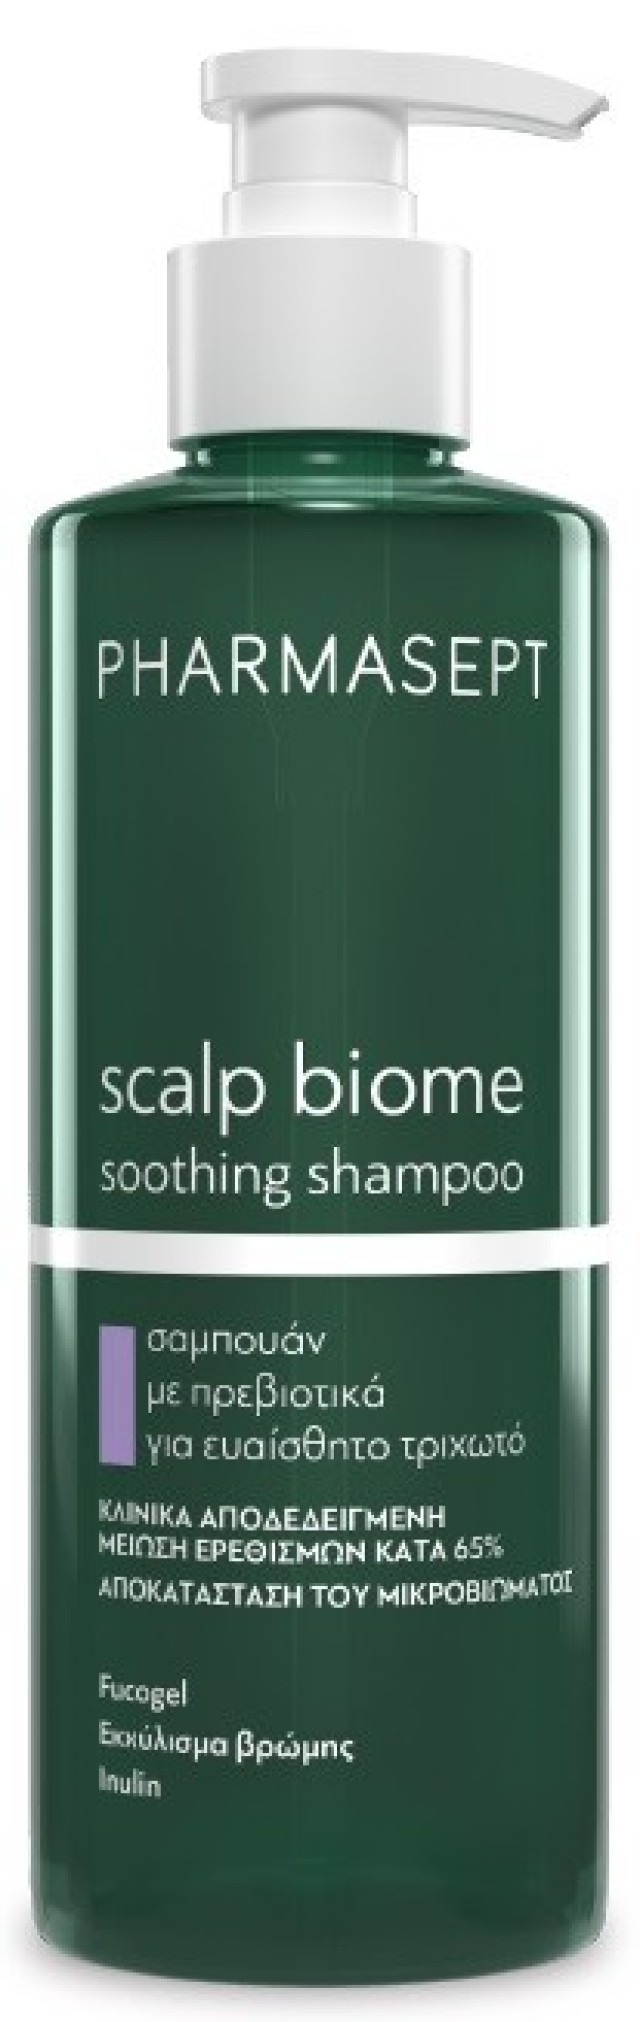 Pharmasept Soothing Shampoo Σαμπουάν Για Ευαίσθητο Τριχωτό Κεφαλής Με Πρεβιοτικά 400ml